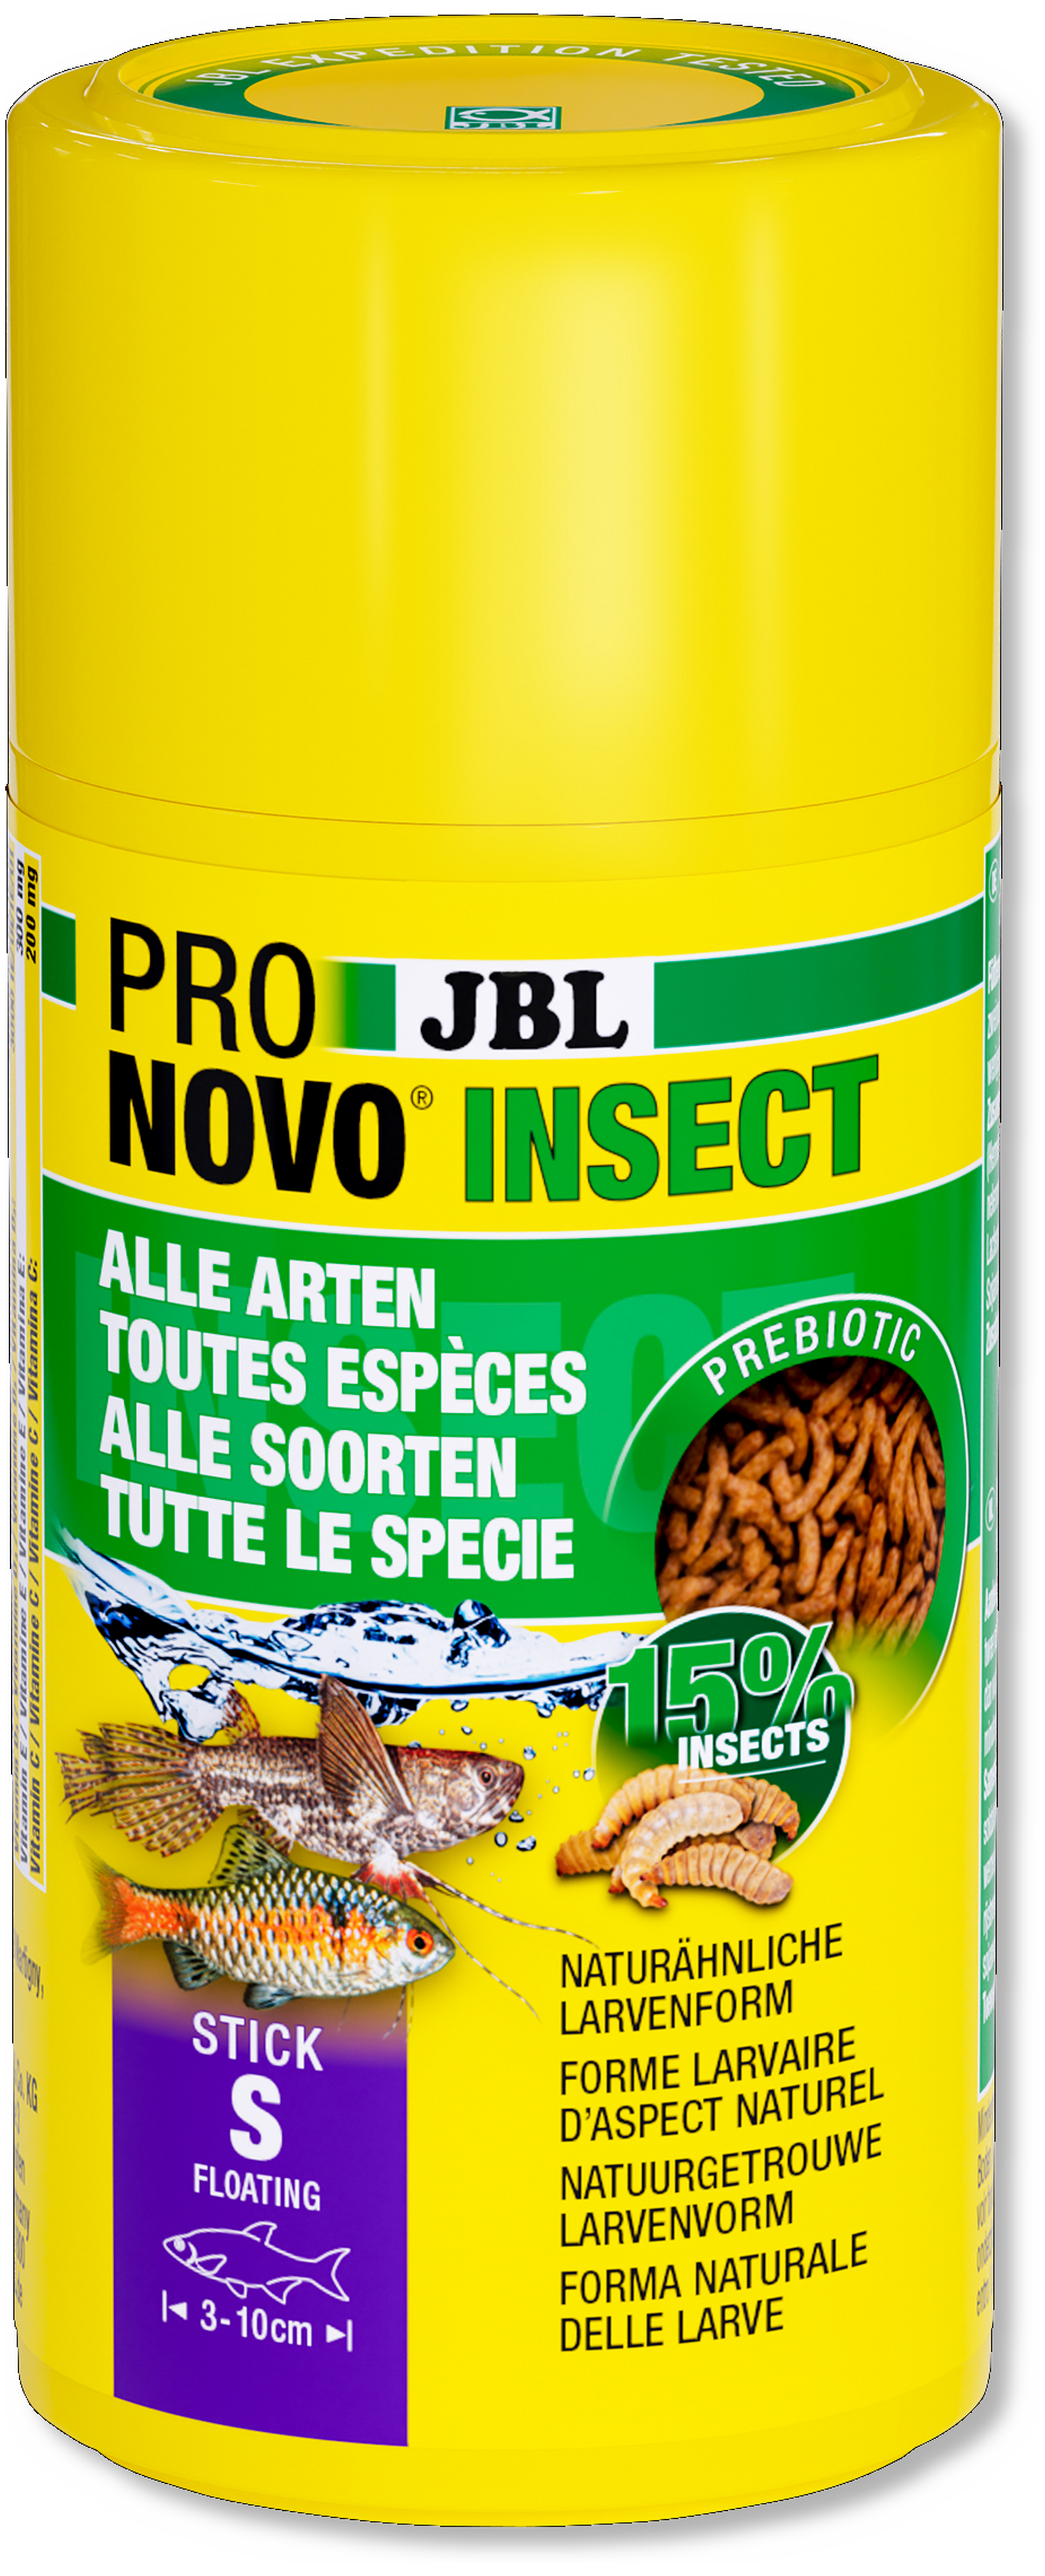 JBL PRONOVO INSECT STICK S